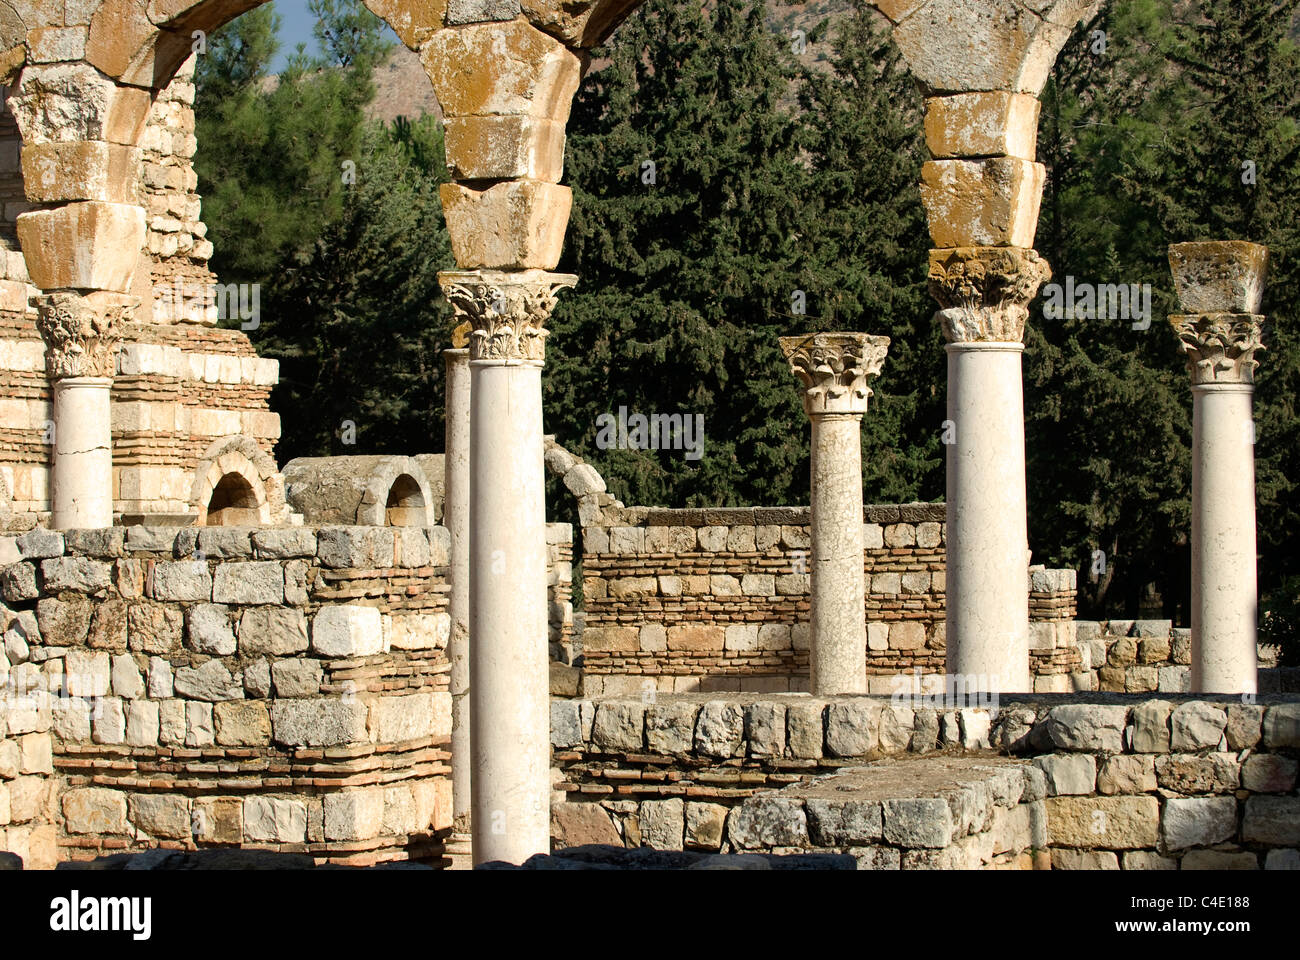 Section of the Great Palace, Aanjar, Bekaa Valley, Lebanon. Stock Photo